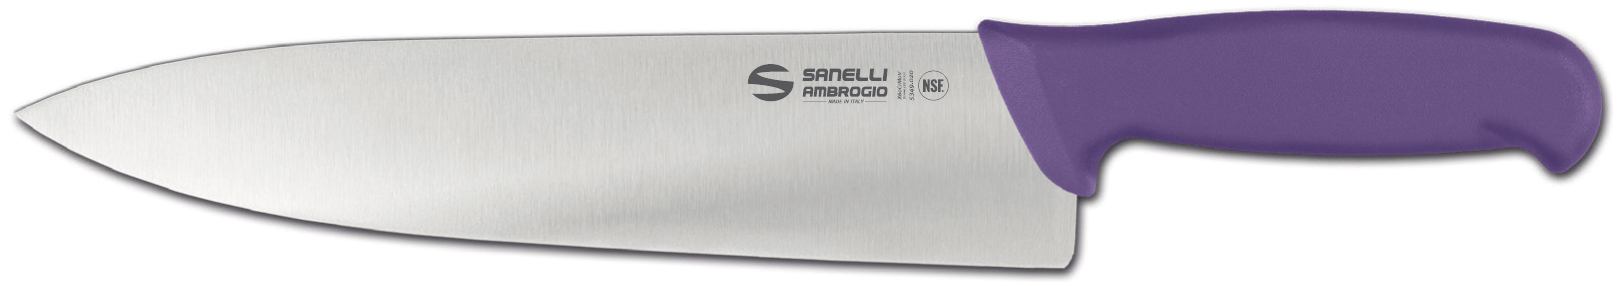 S349.024P SUPRA CHEFS KNIFE PURPLE HANDLE 24CM LAMA SANELLI AMBROGIO